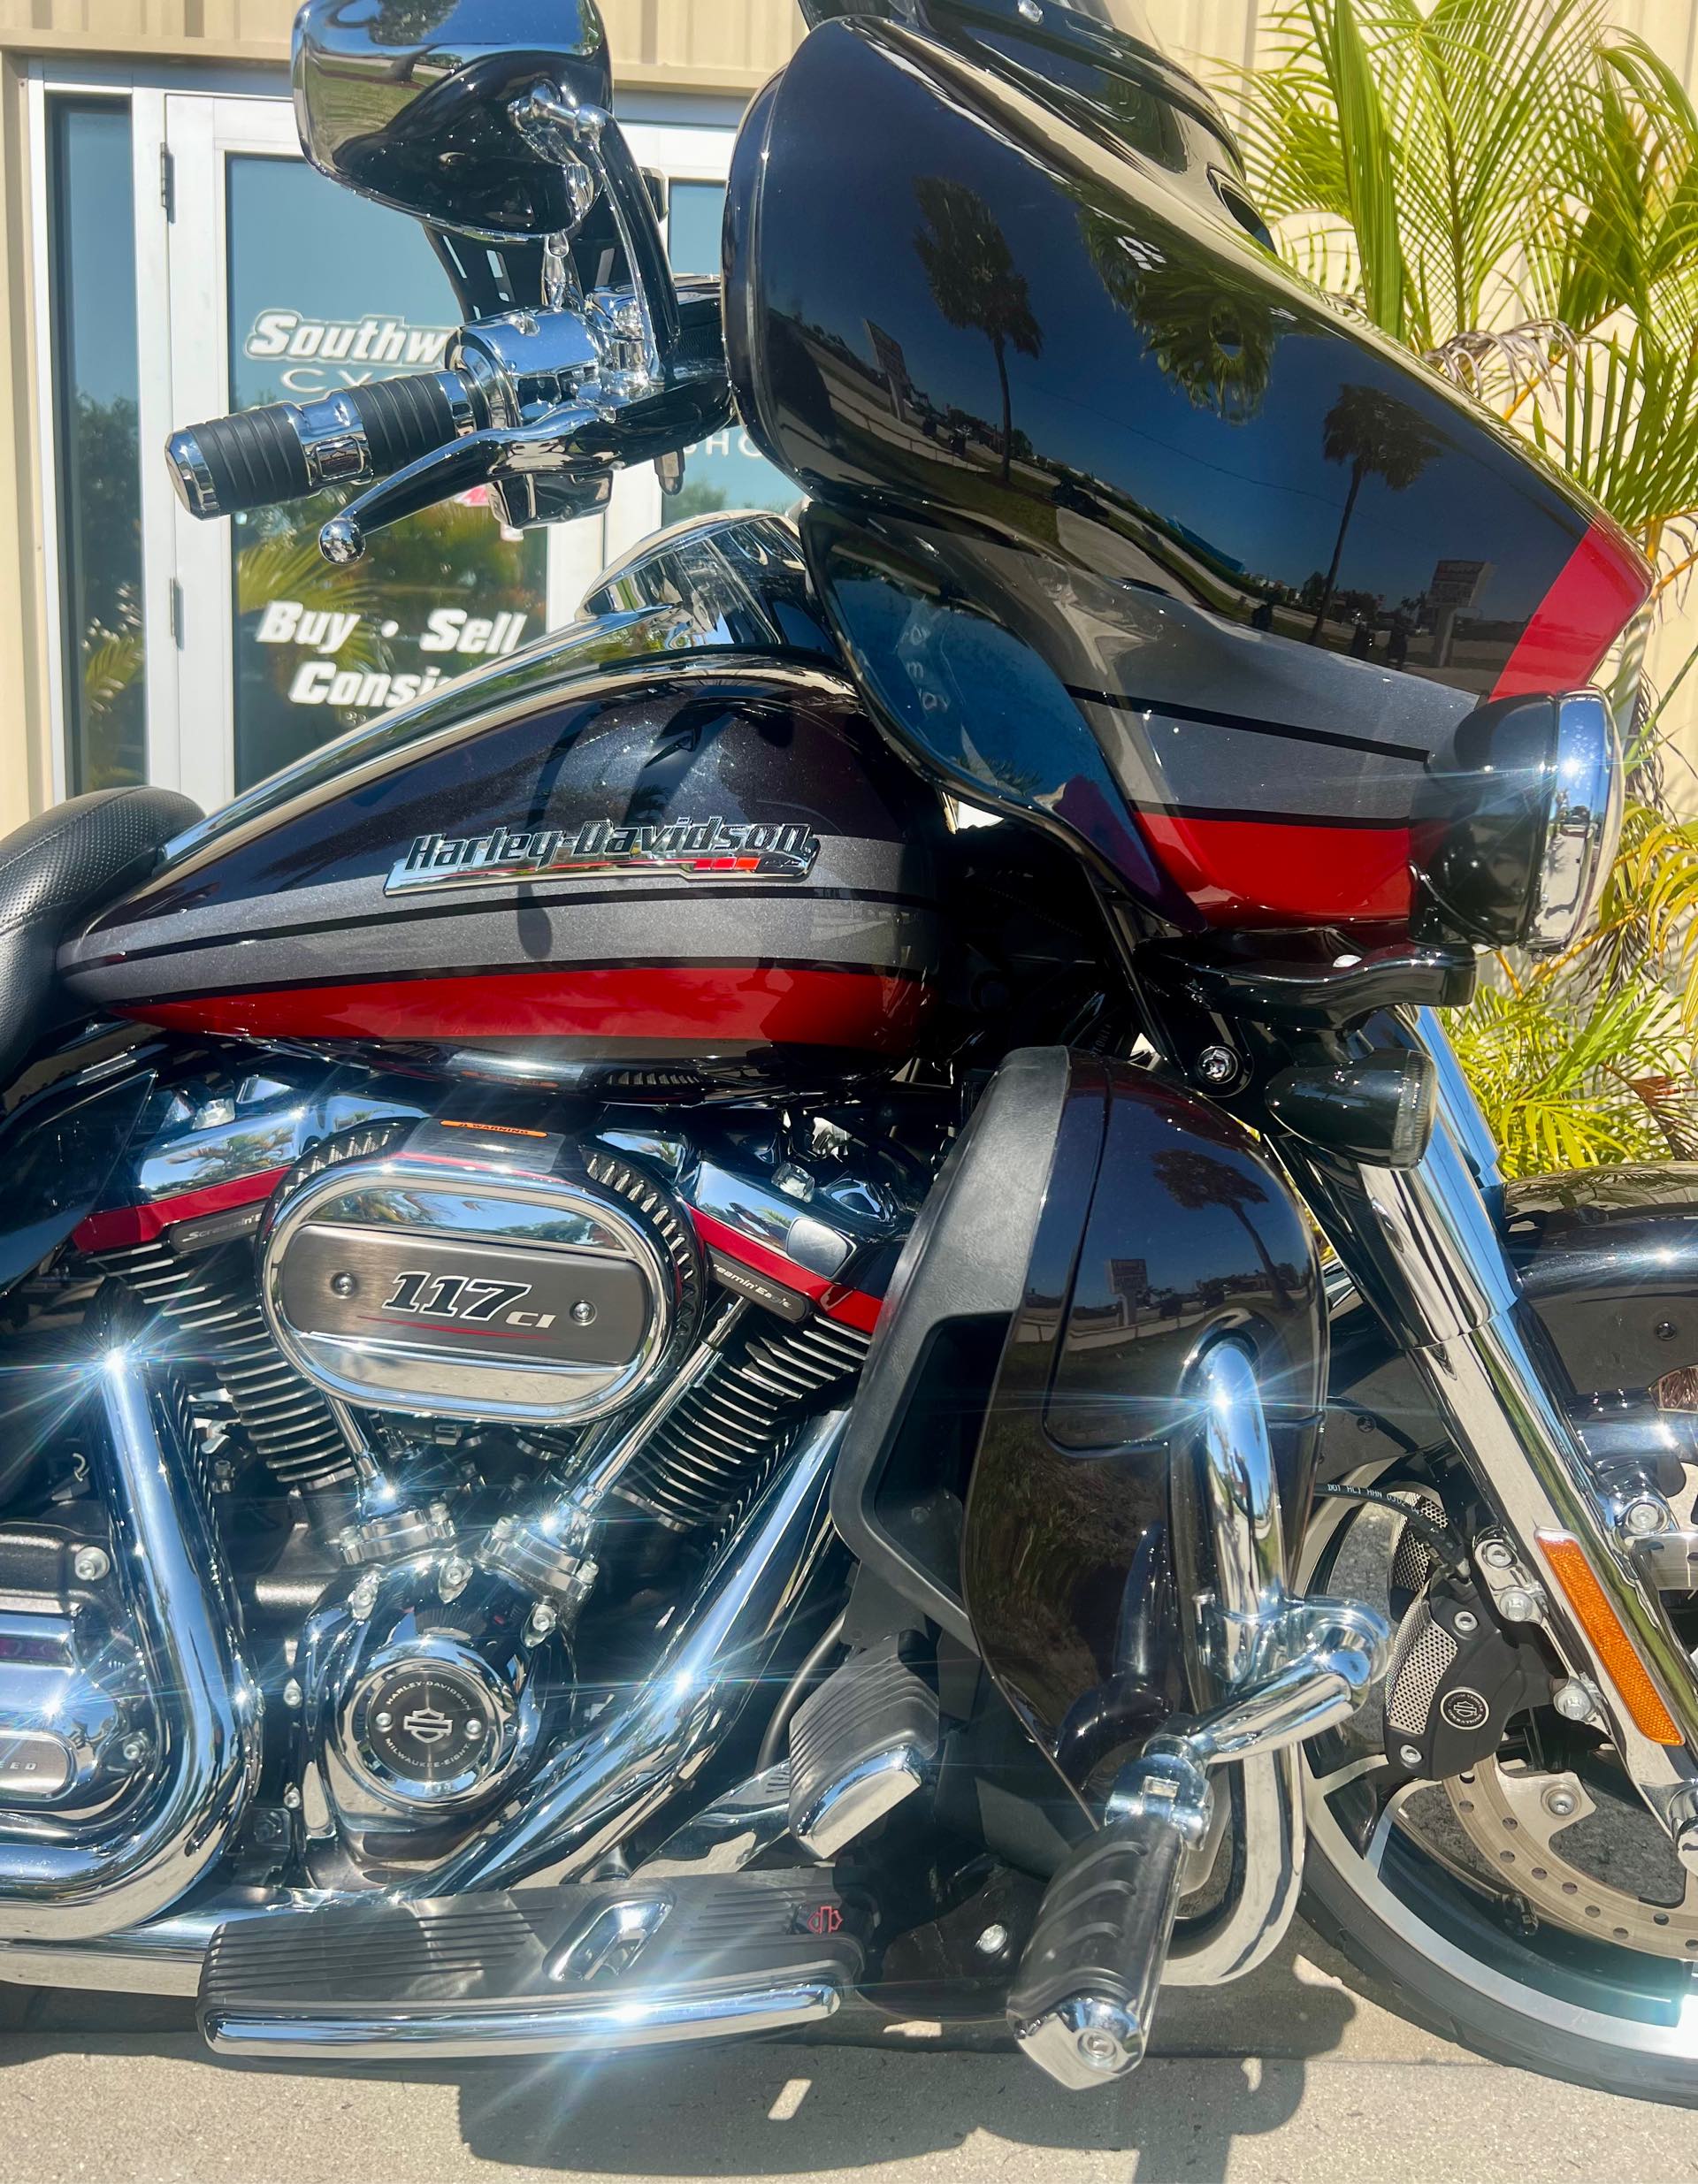 2020 Harley-Davidson CVO CVO Tri Glide at Southwest Cycle, Cape Coral, FL 33909